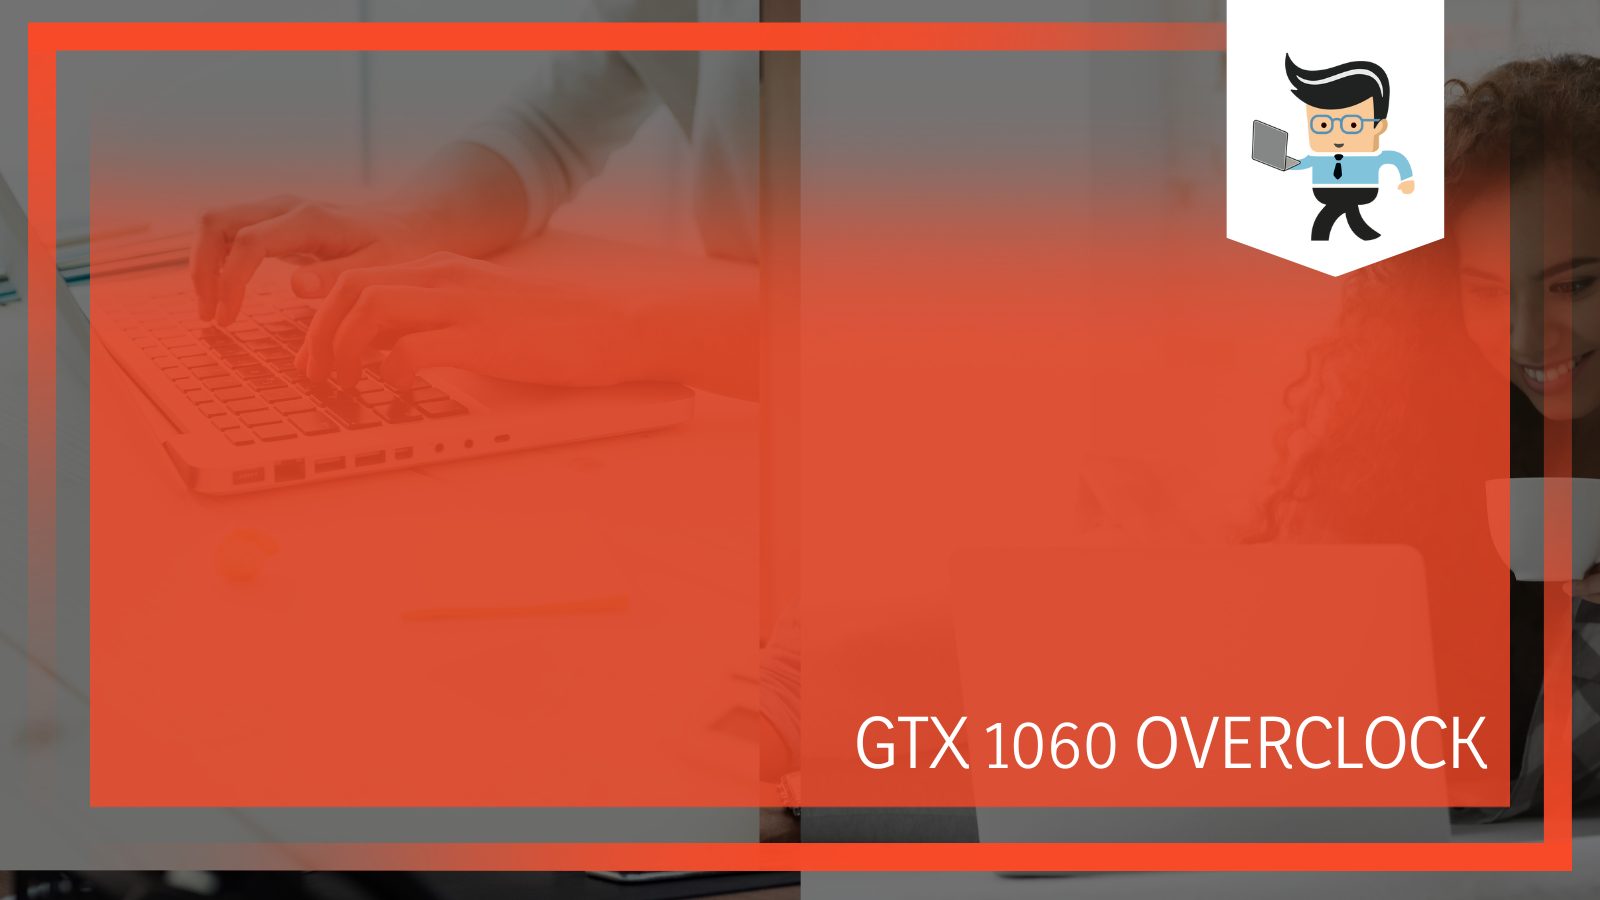 GTX 1060 Overclock